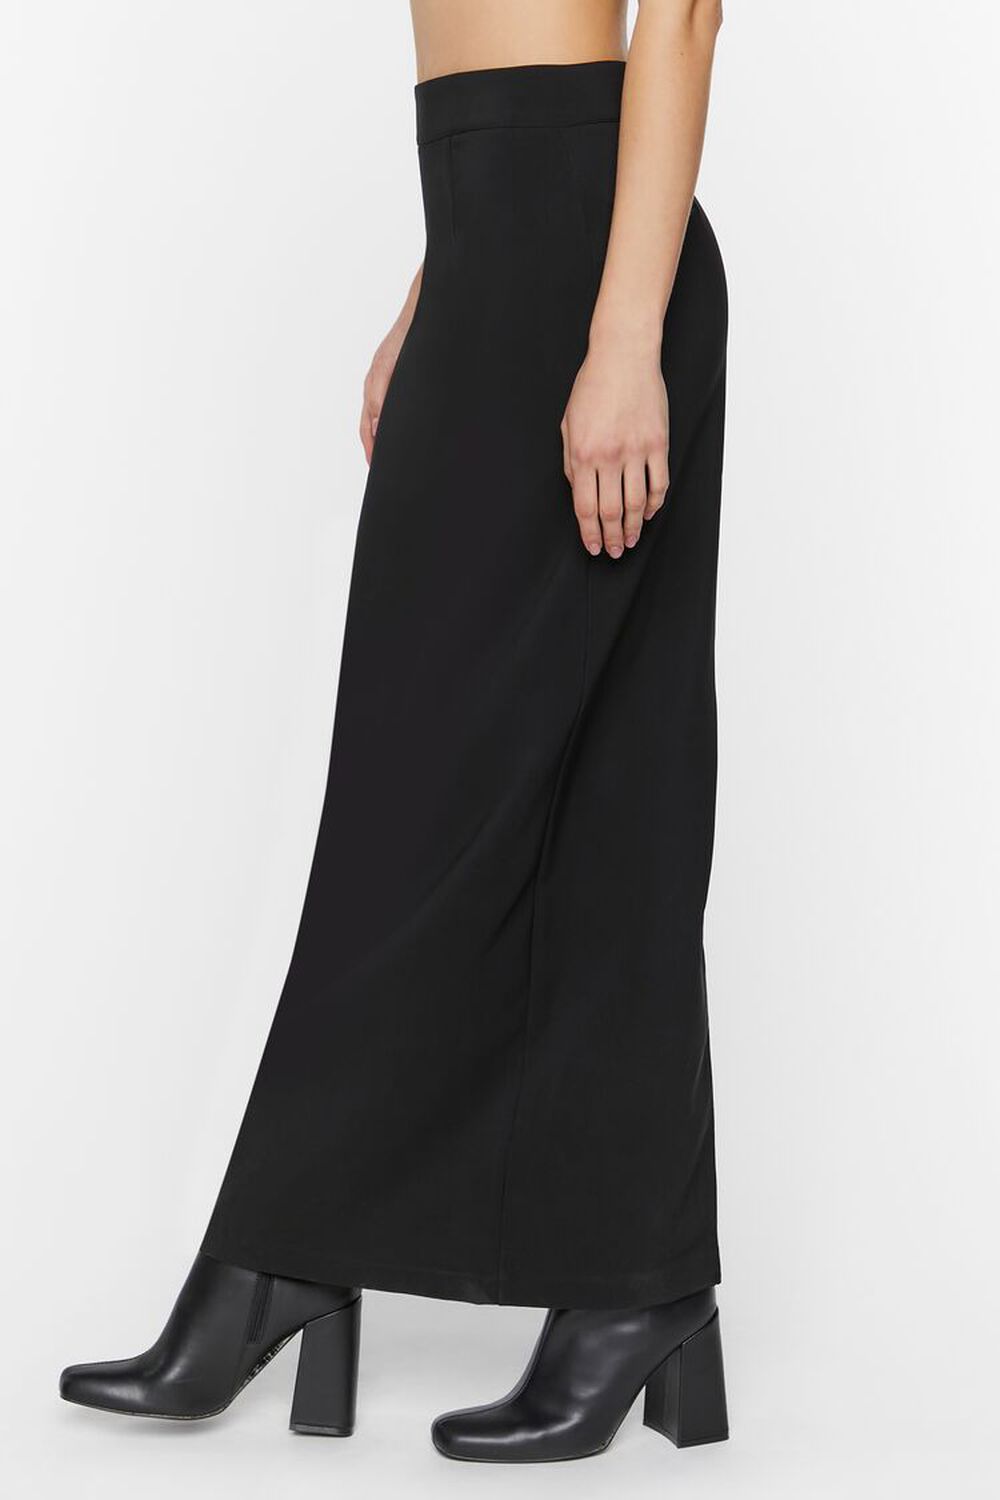 BLACK Zip-Slit Maxi Skirt, image 3